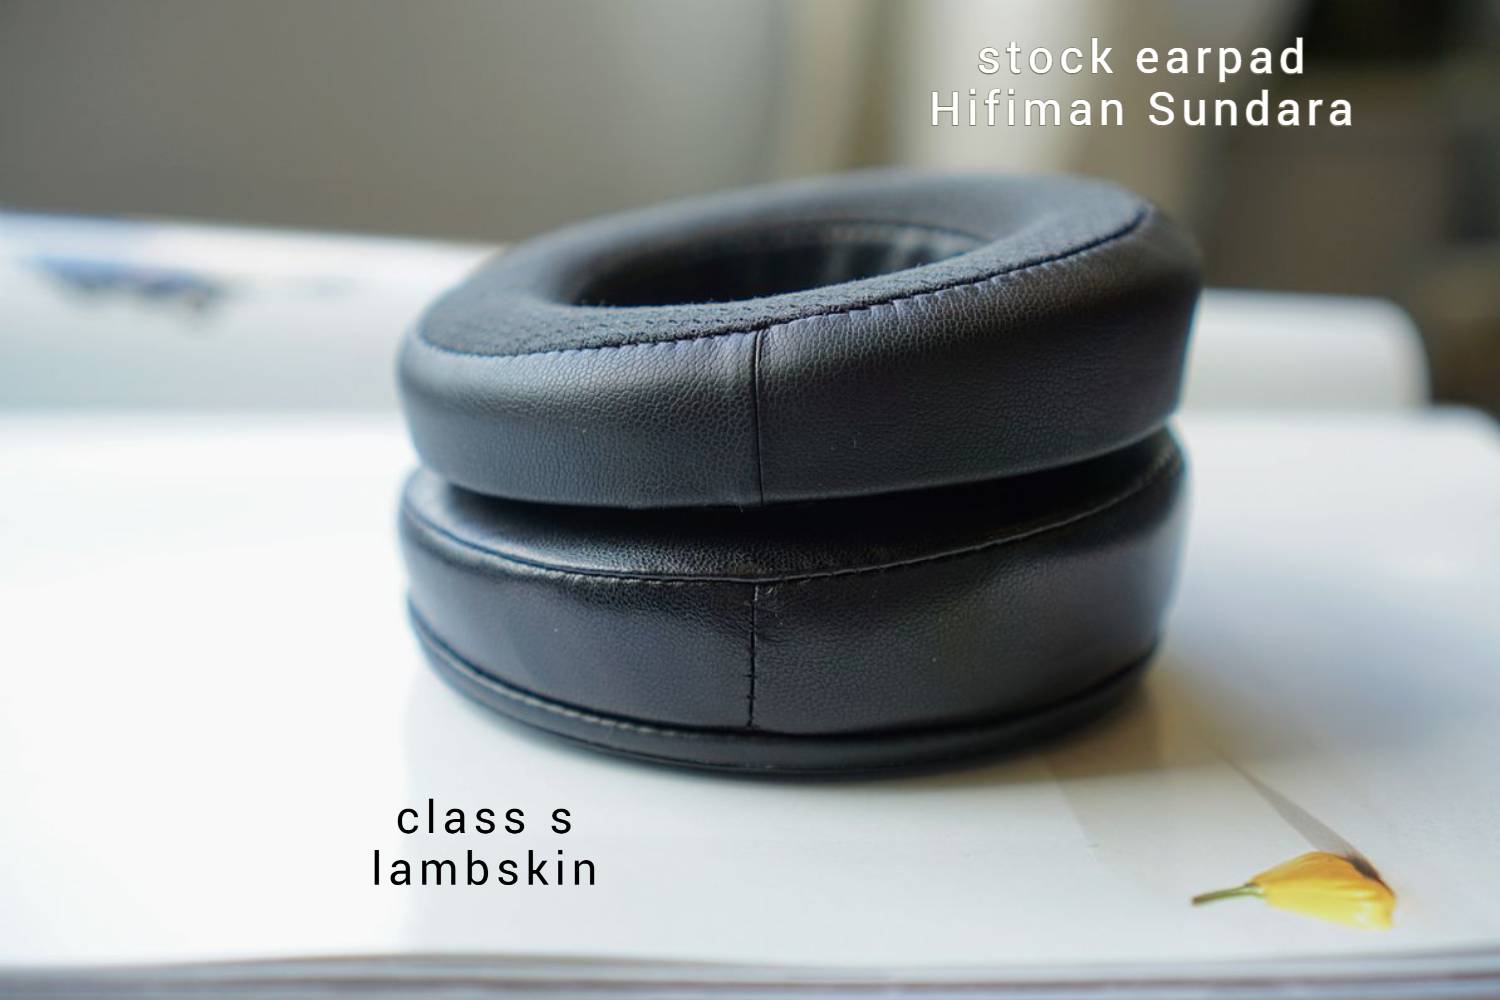 (Class S Lambskin) aftermarket earpads Hifiman Sundara HE400se HE400i HE400 HE560 HE6 [with filter & bracket]